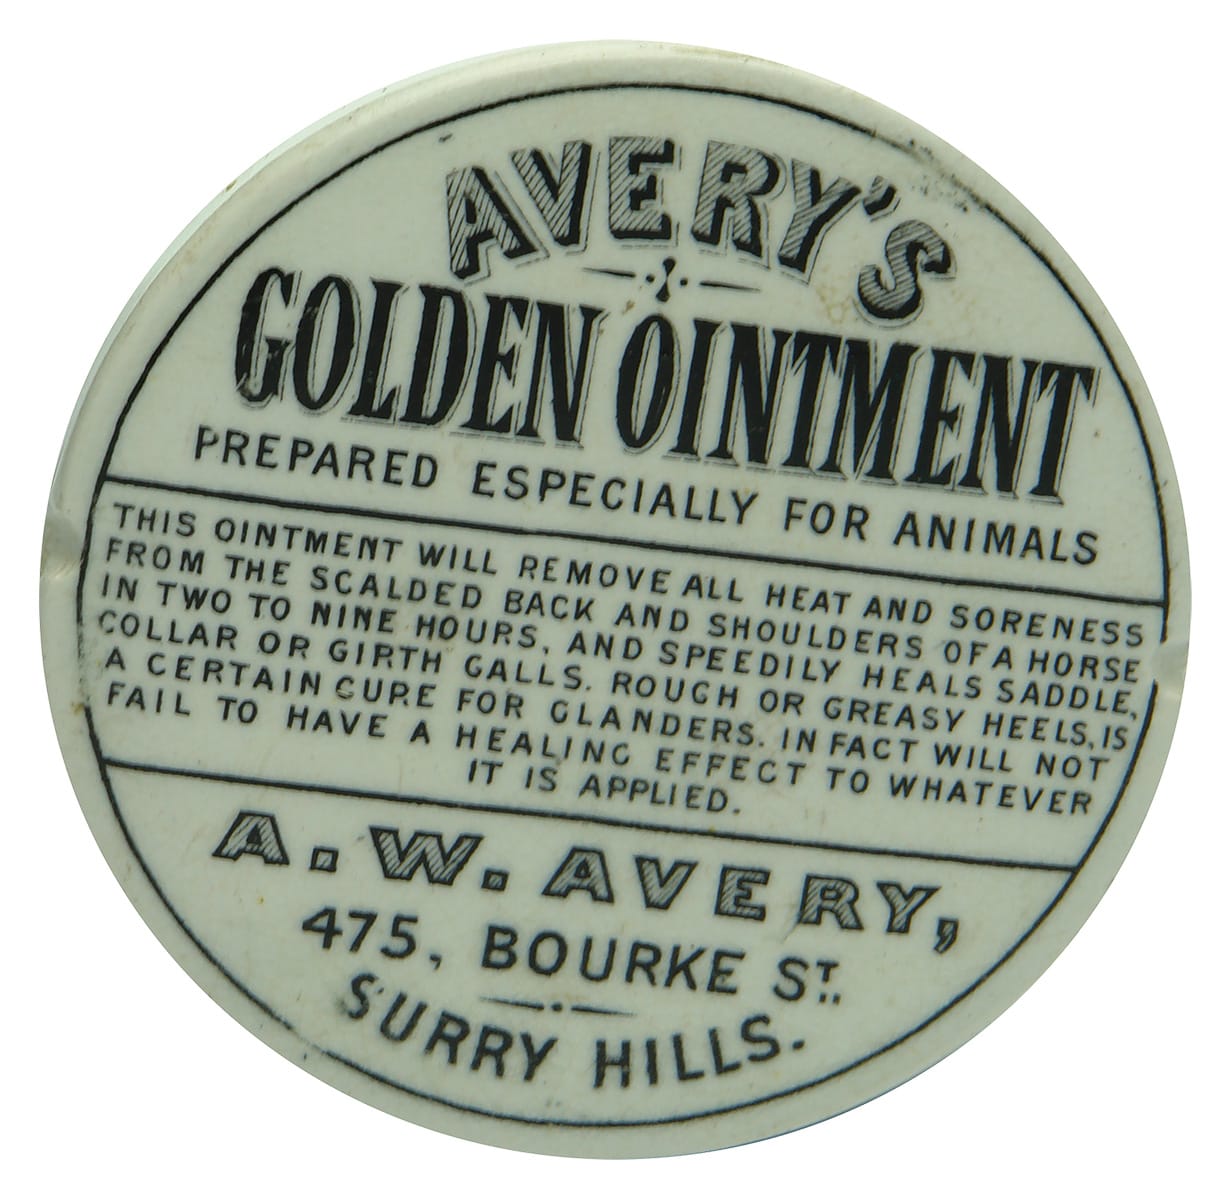 Avery's Golden Ointmnt Surry Hills Pot lid